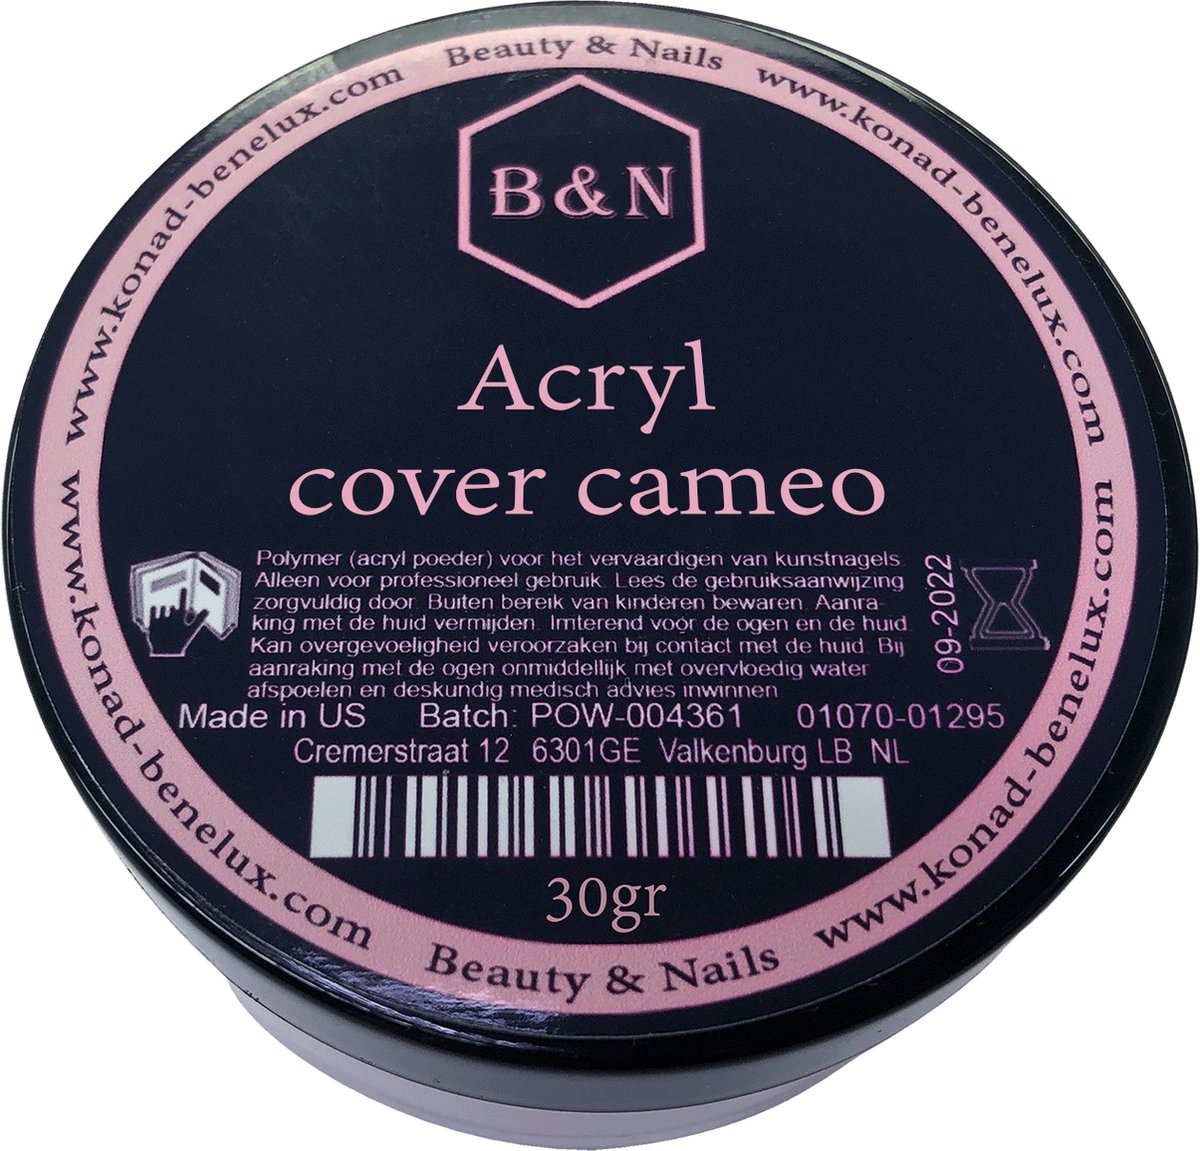 Acryl - cover cameo - 30 gr | B&N - acrylpoeder - VEGAN - acrylpoeder